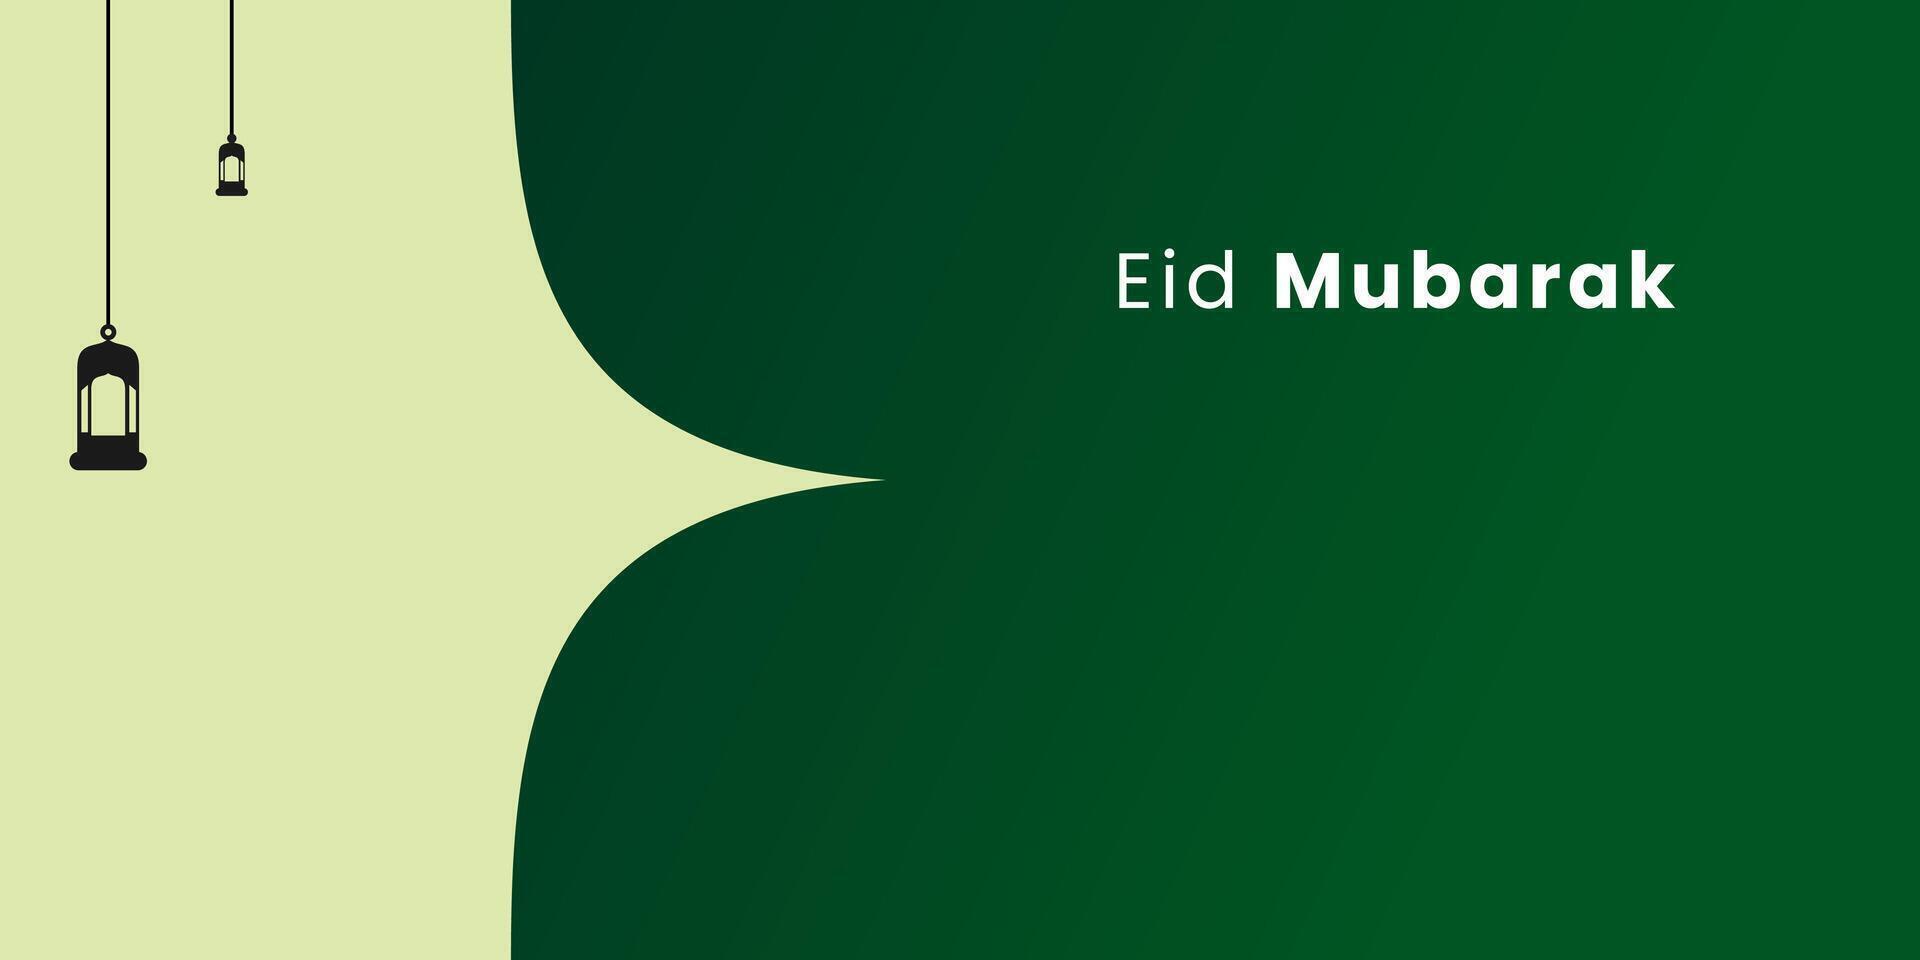 eid mubarak greeting card with lamps vector